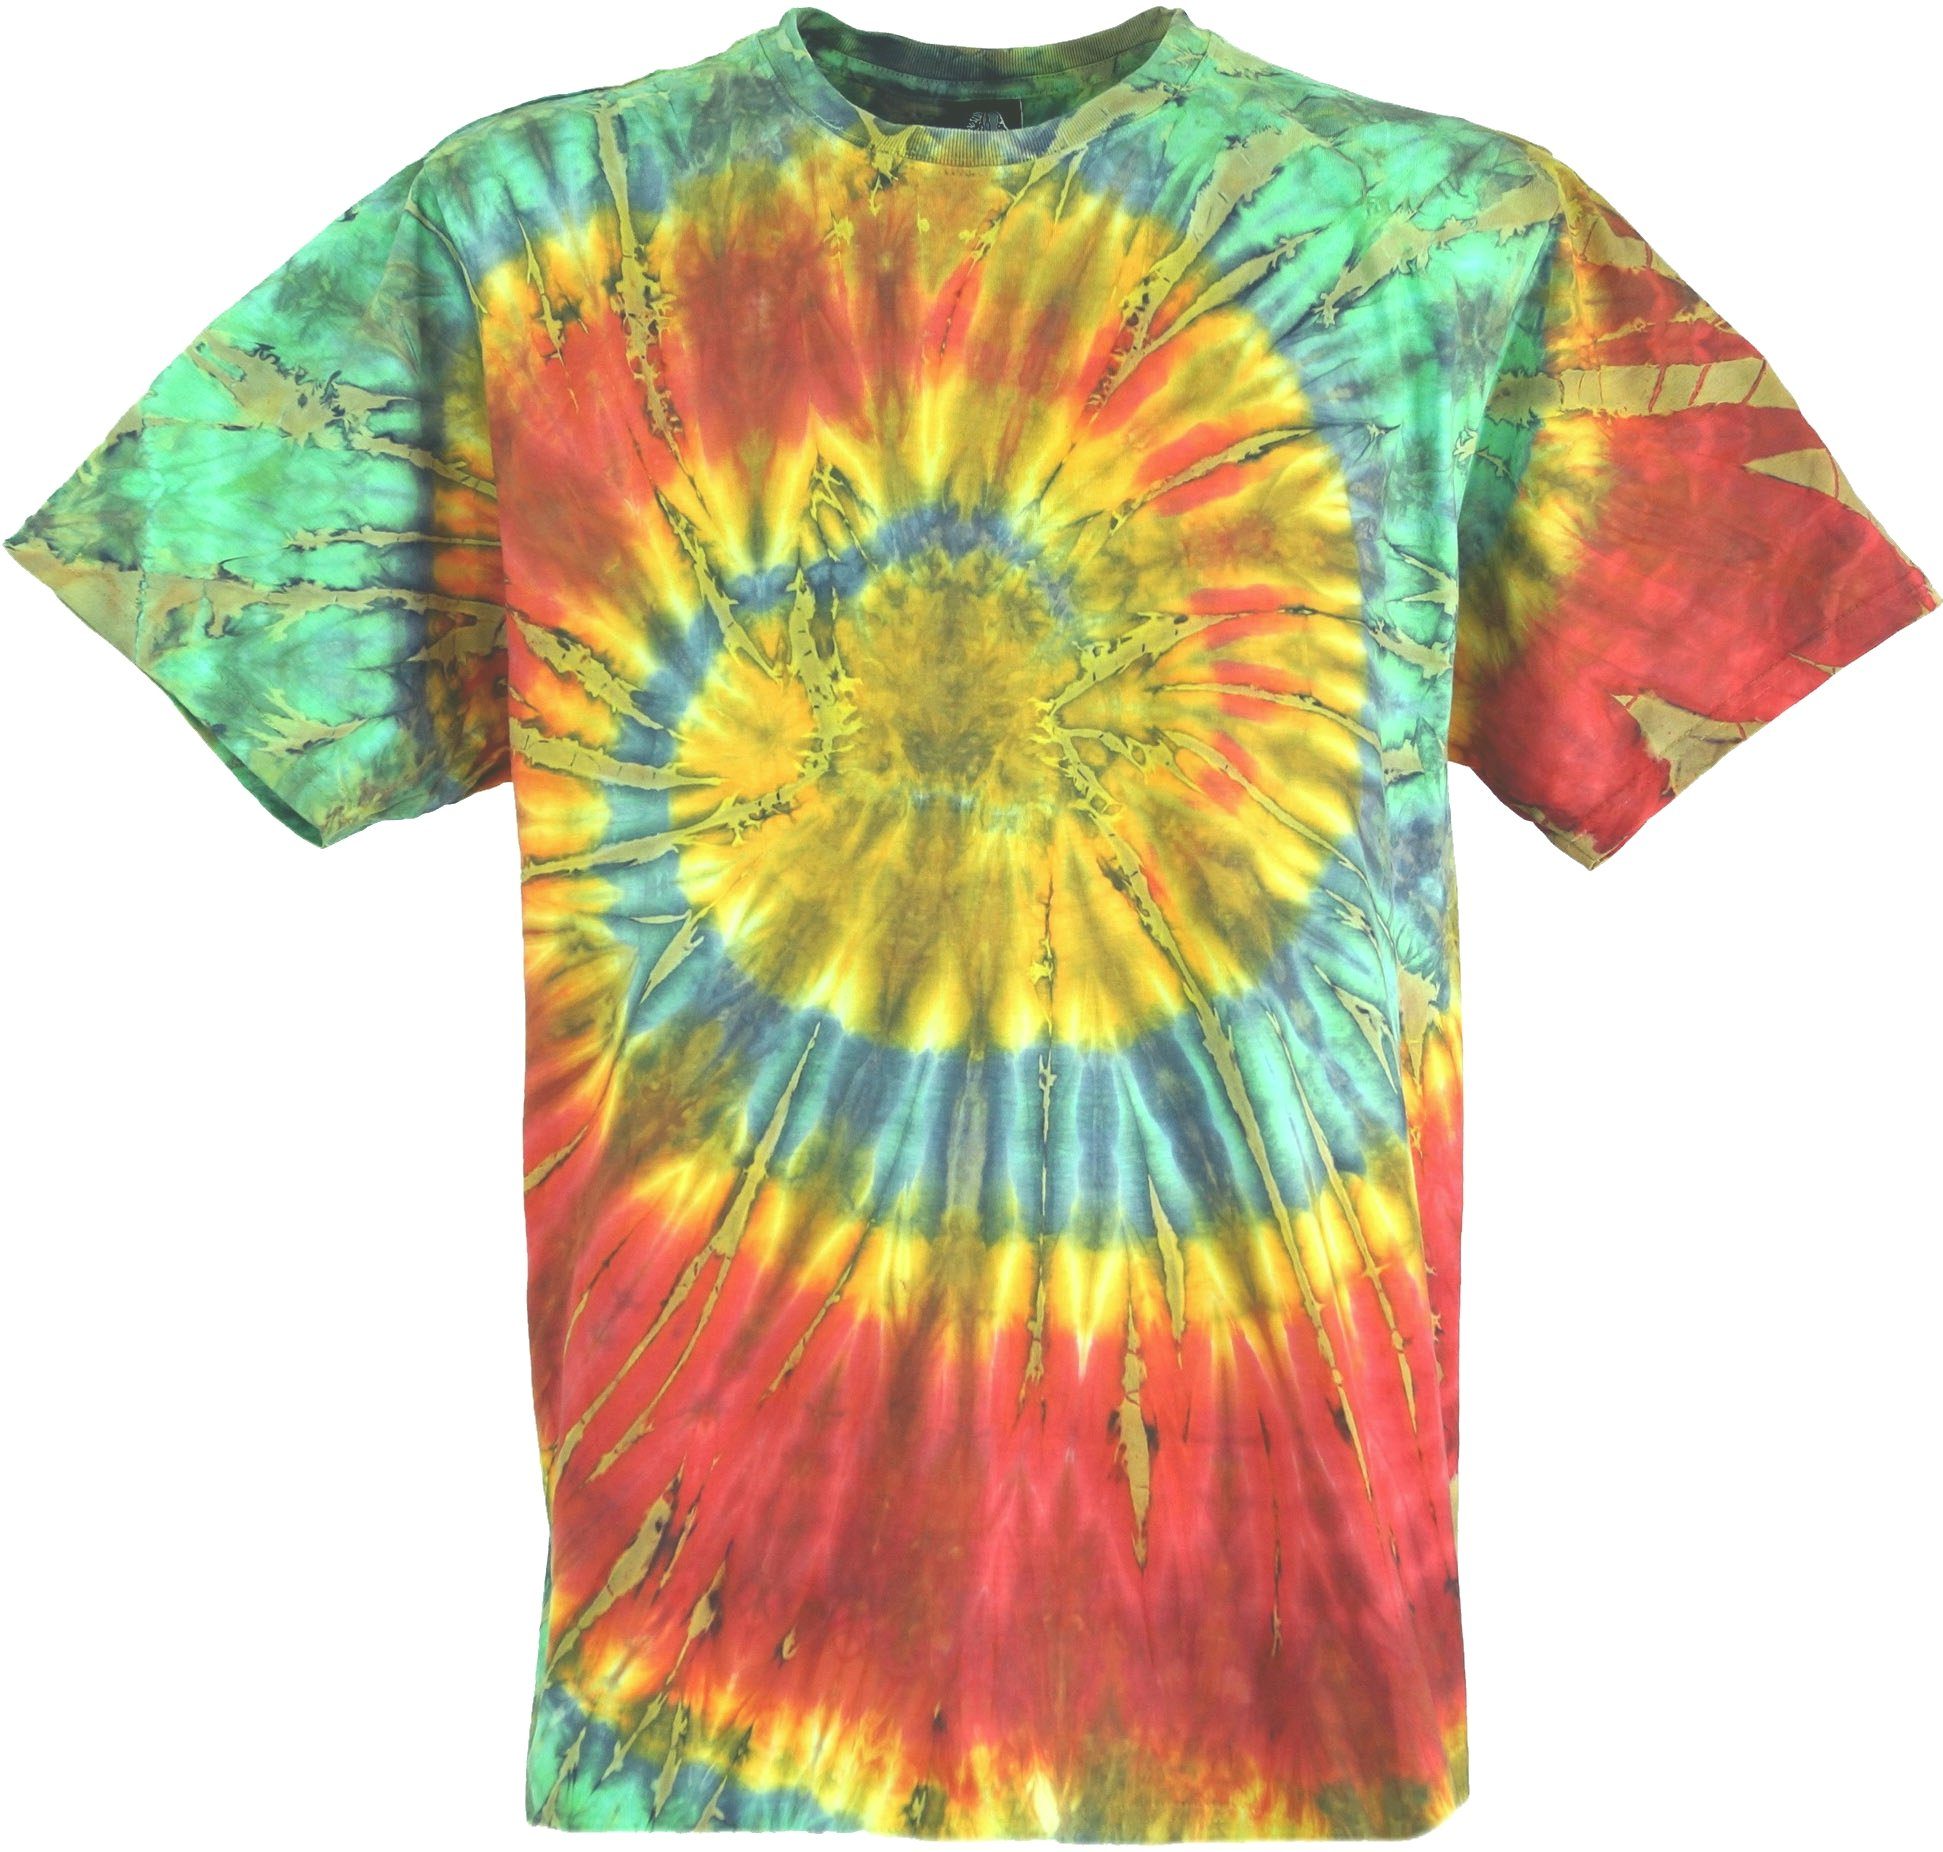 Guru-Shop T-Shirt Batik T-Shirt, Herren Kurzarm Tie Dye Shirt -.. Handarbeit, Hippie, Festival, Goa Style, alternative Bekleidung rot/grün Spirale